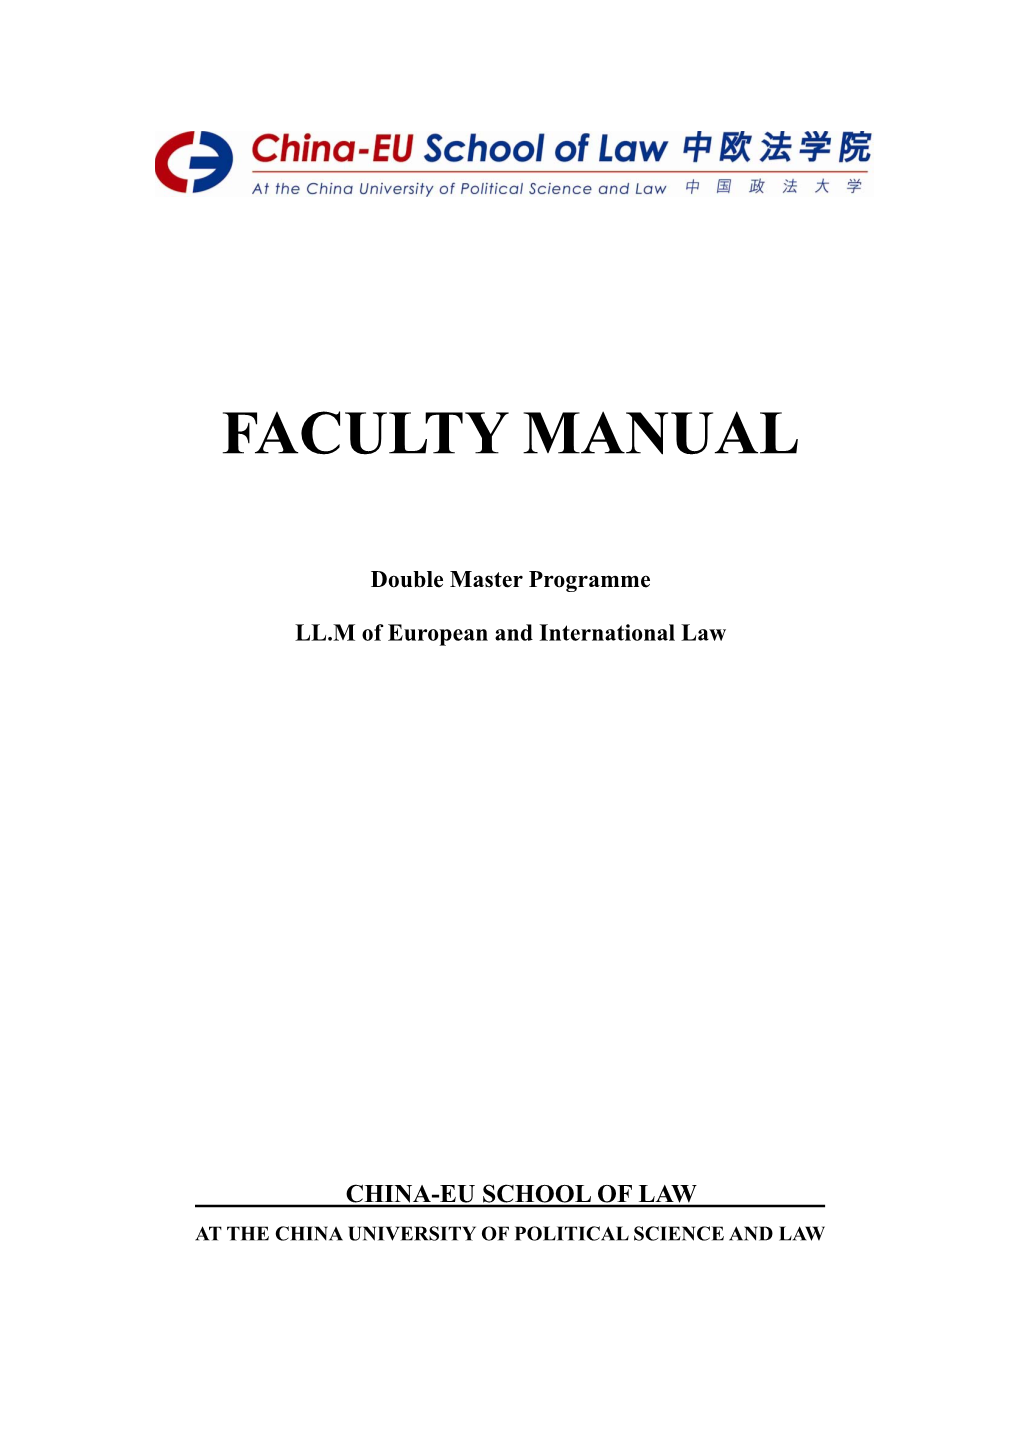 Faculty Manual